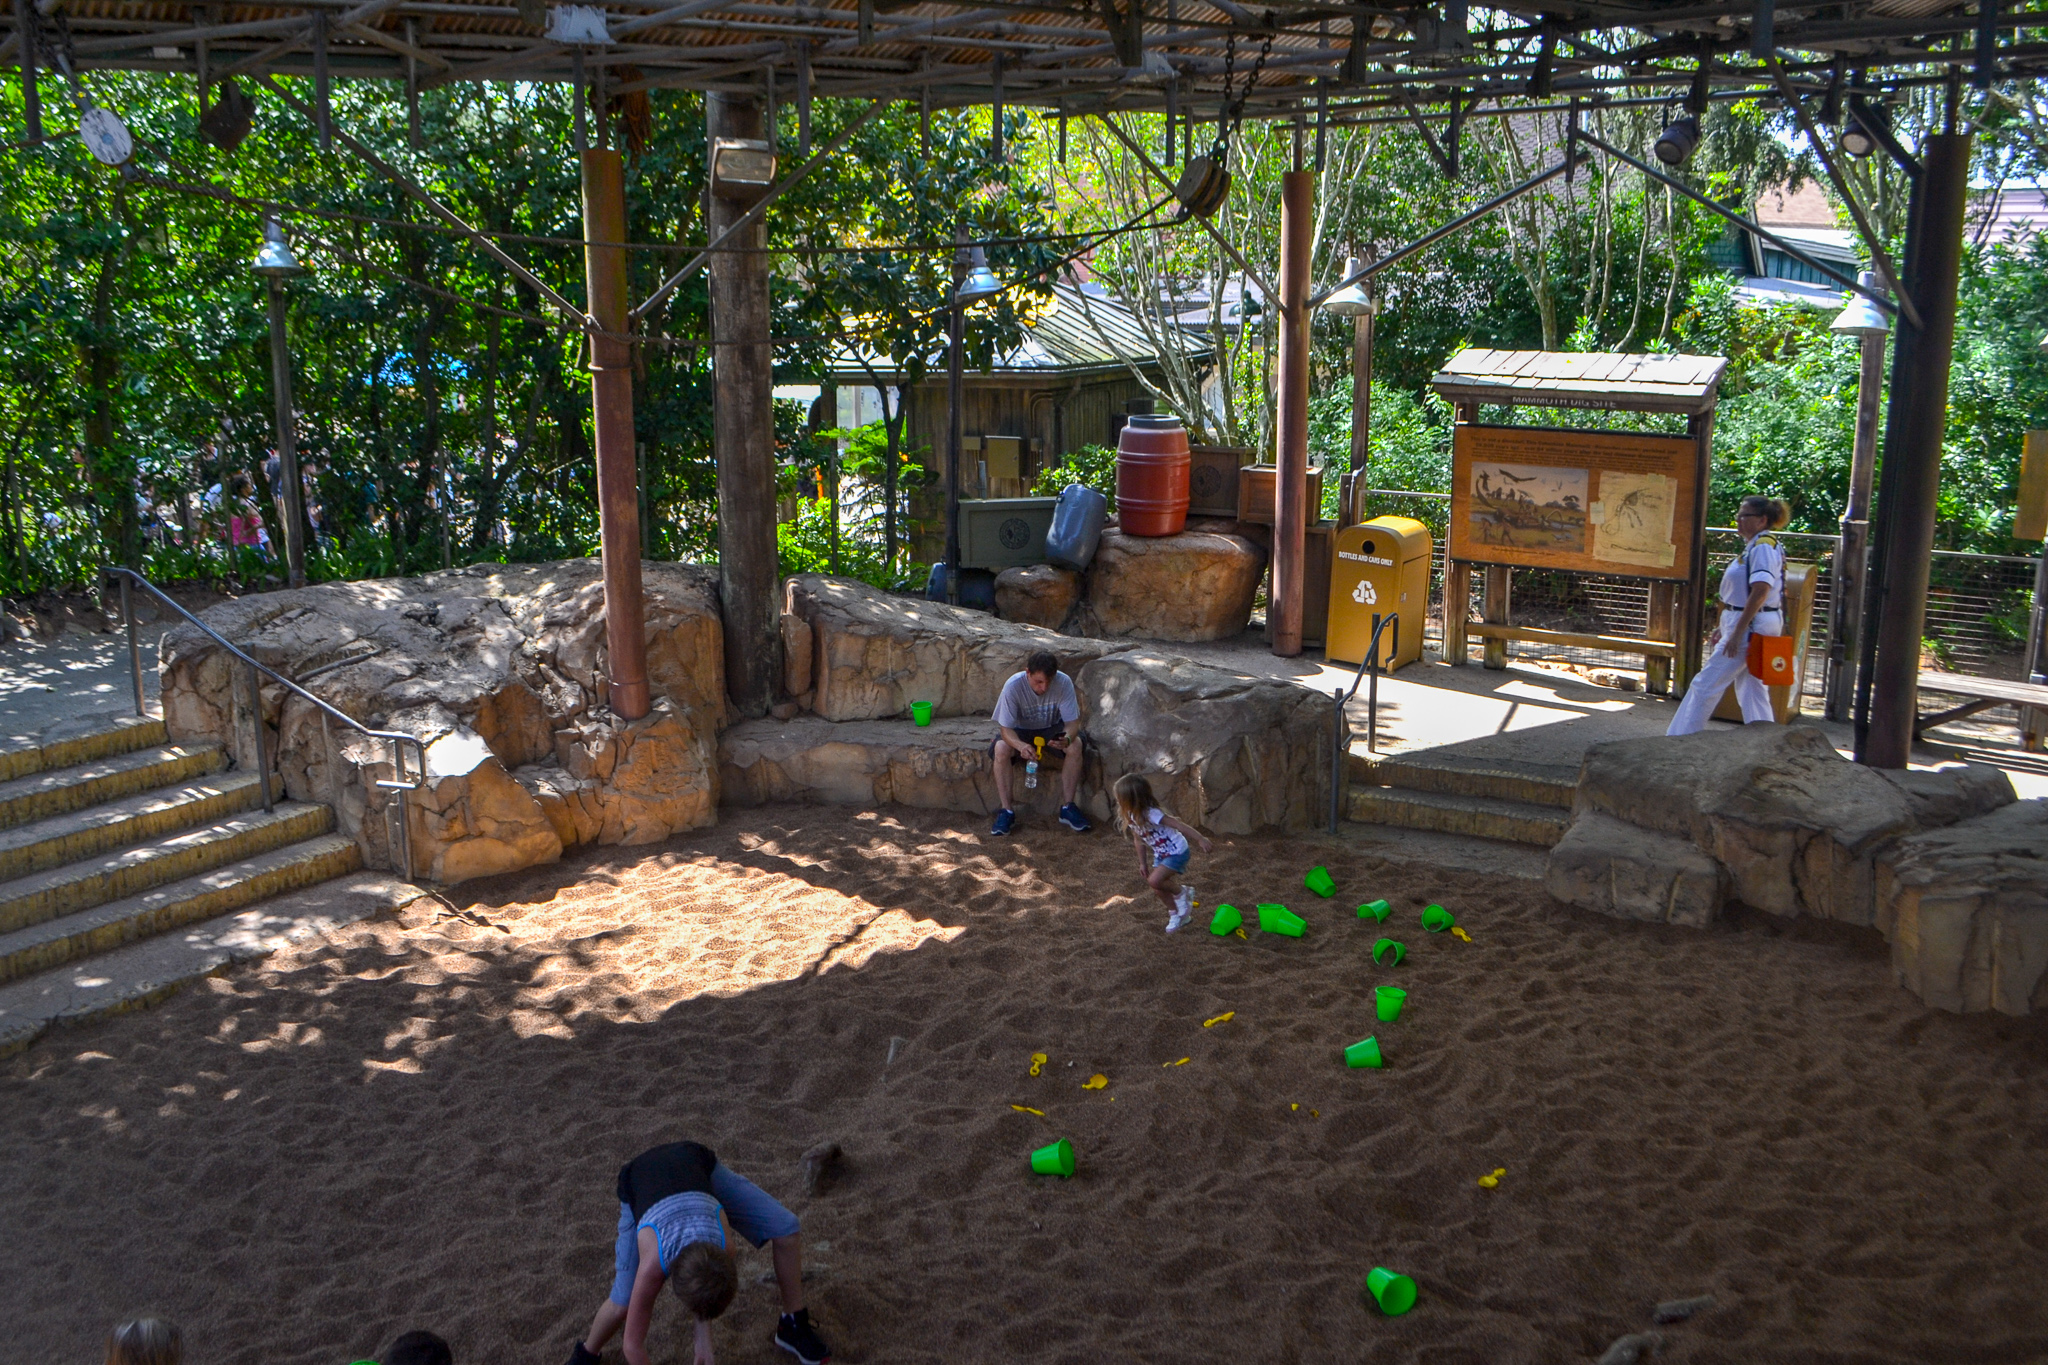 Children digging in sand pit at Boneyard in Animal Kingdom